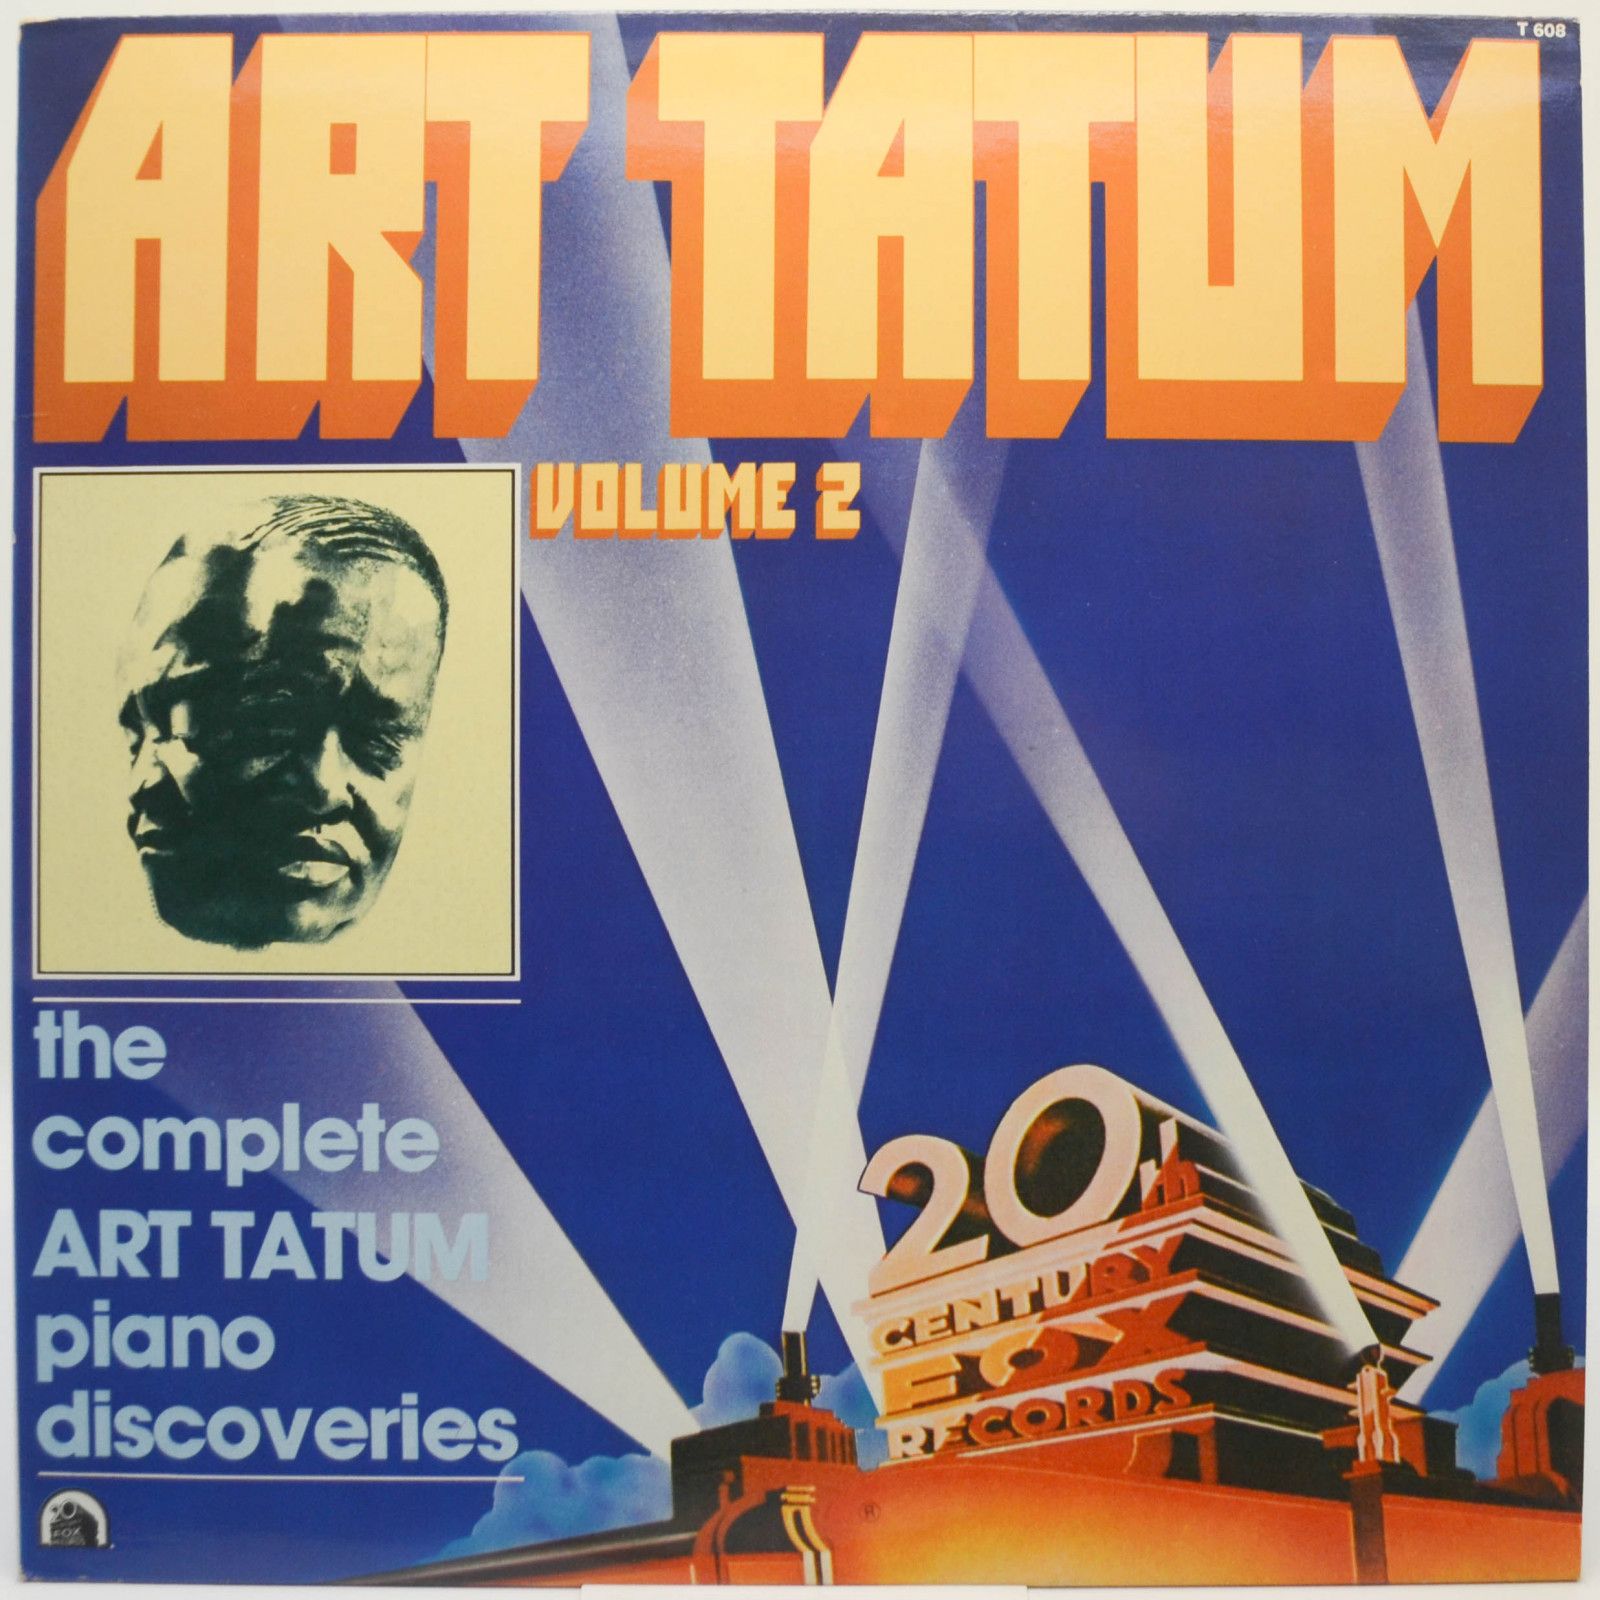 Art Tatum — The Complete Art Tatum Piano Discoveries Volume 2, 1974